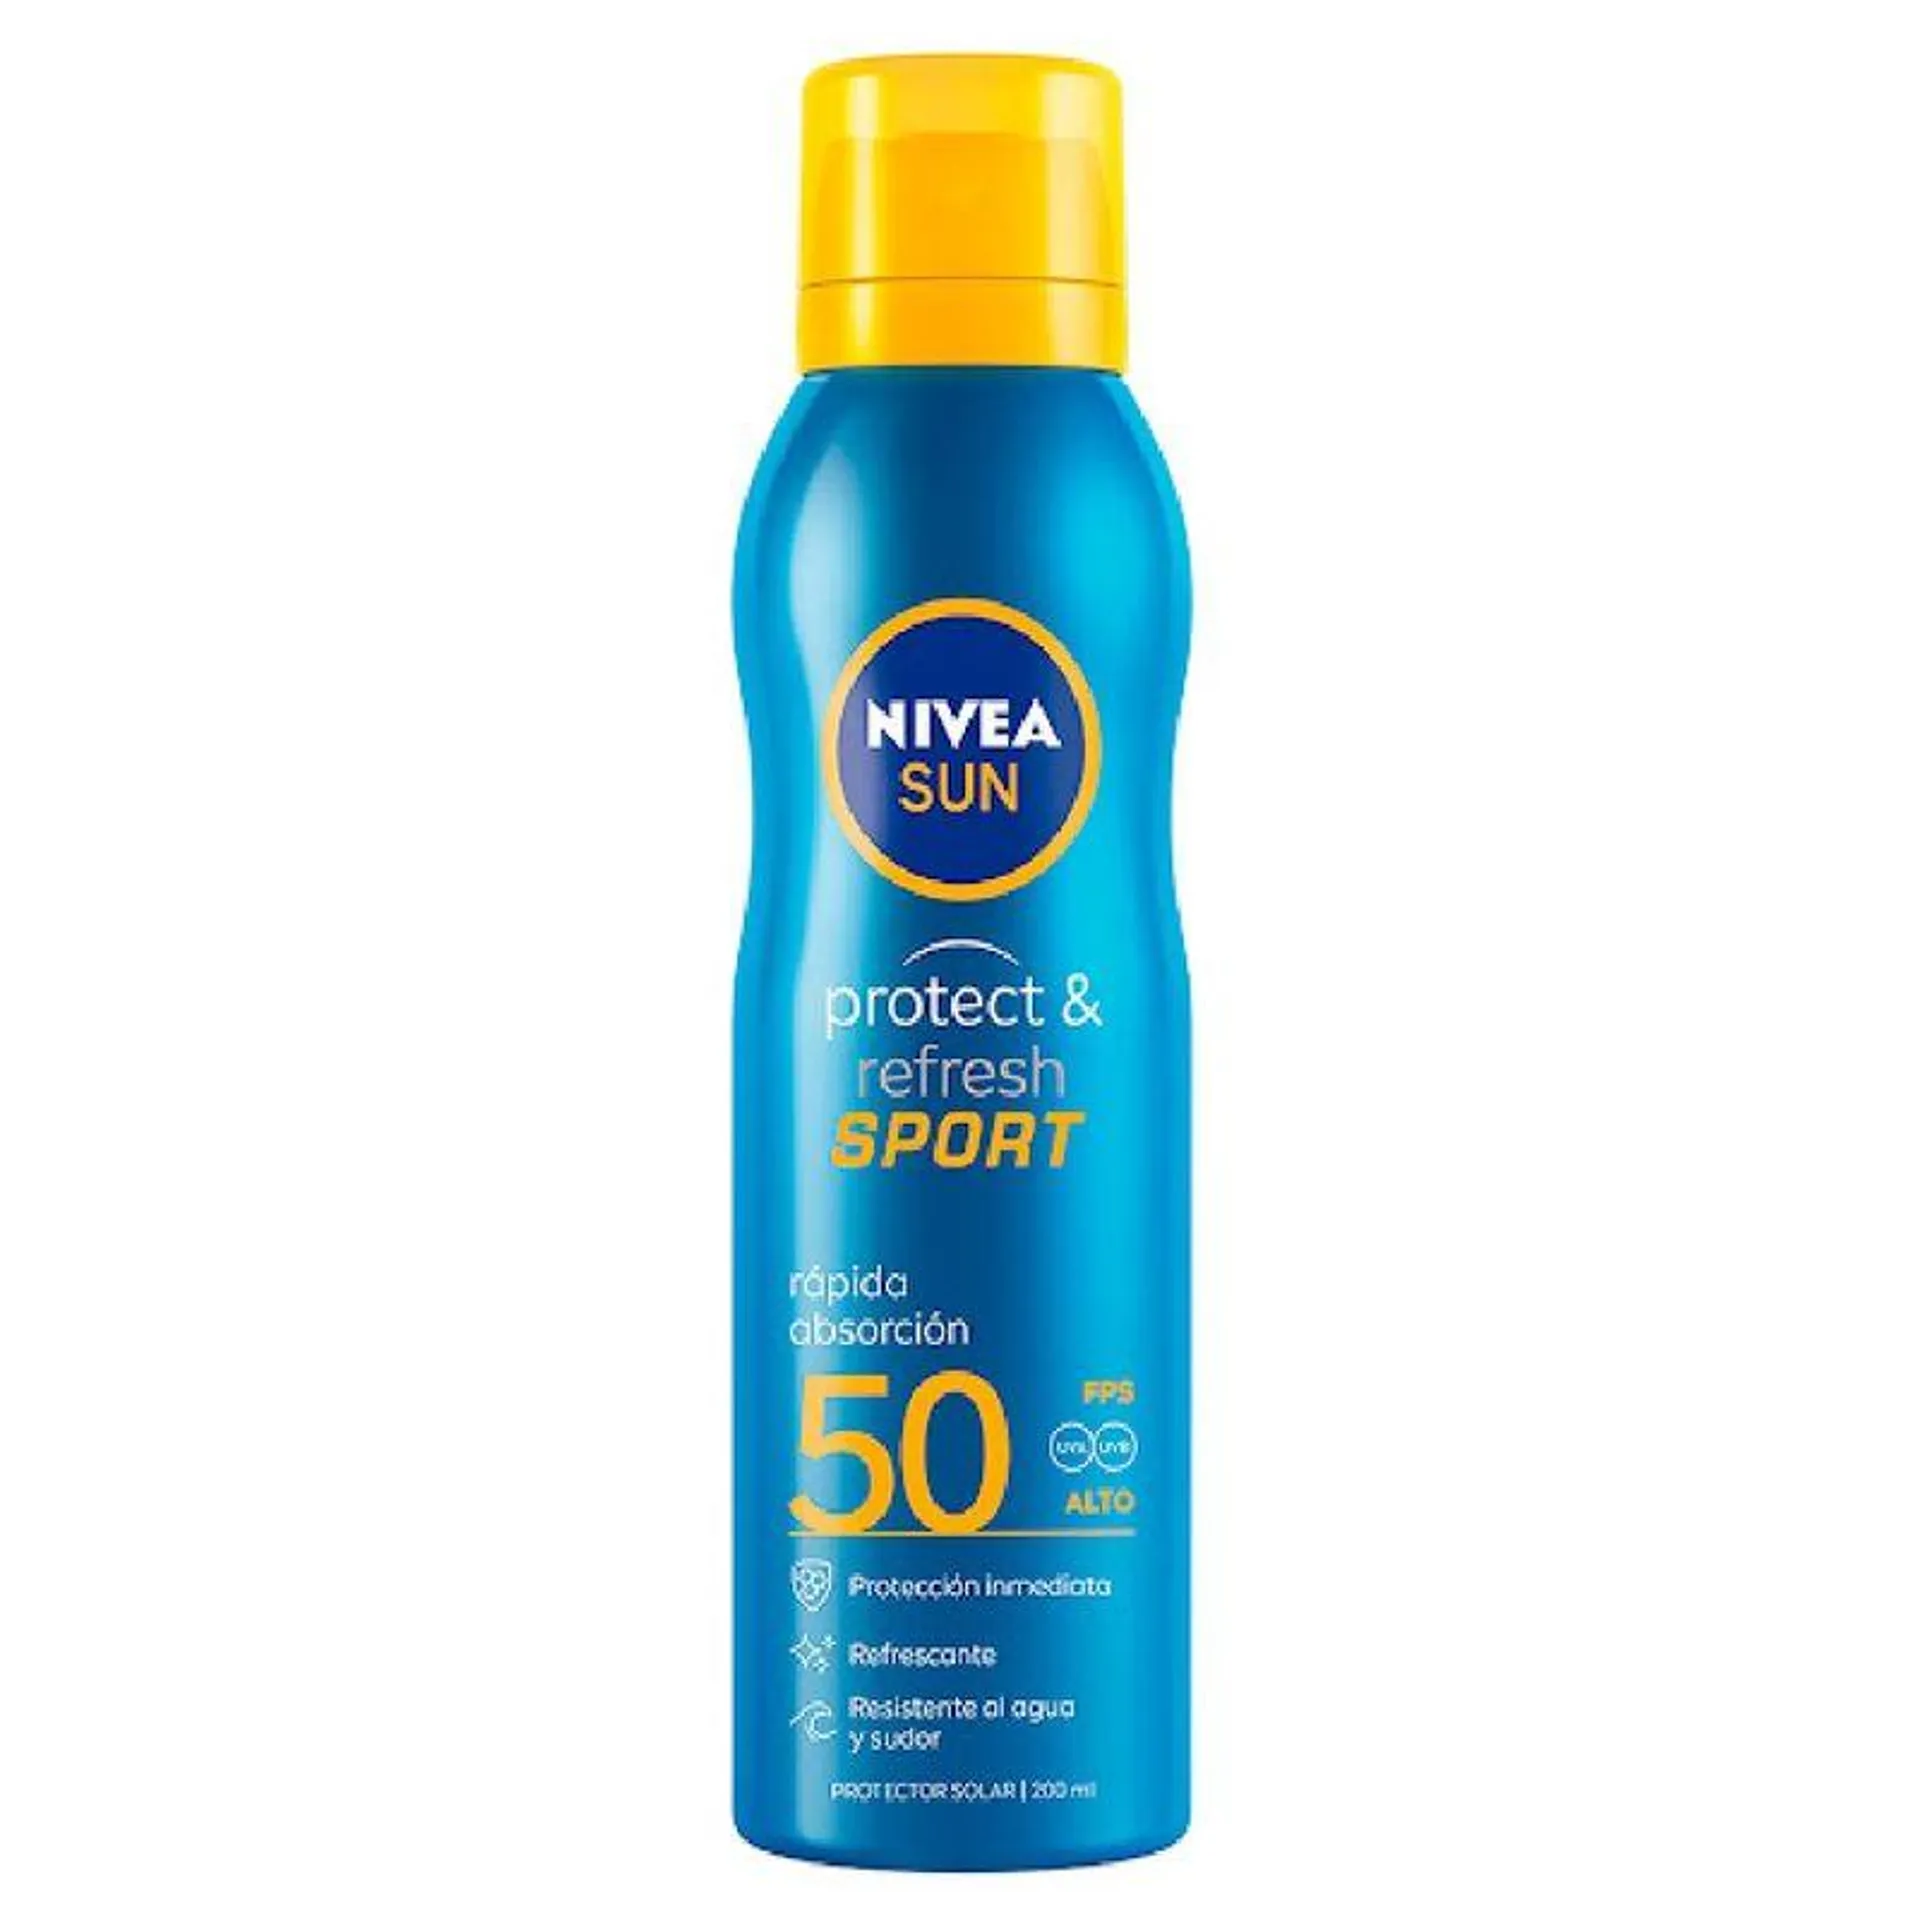 Protector Sun Spray Protec<(>&<)>Refres Nivea 200 ml